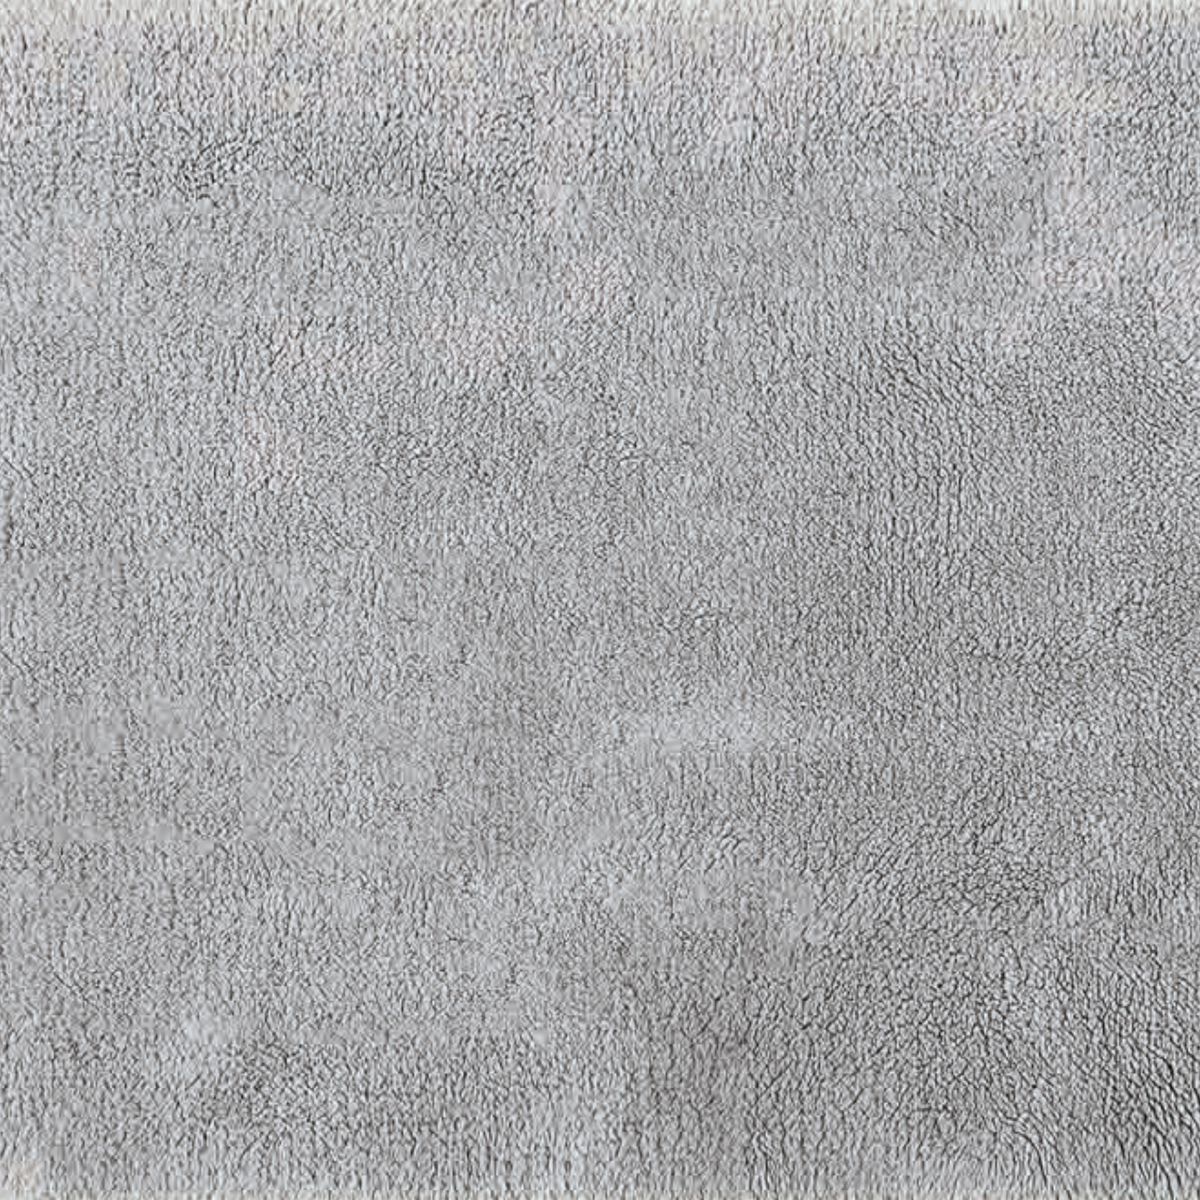 Fabric Closeup of a Silver Graccioza Plain Egoist Bath Rug